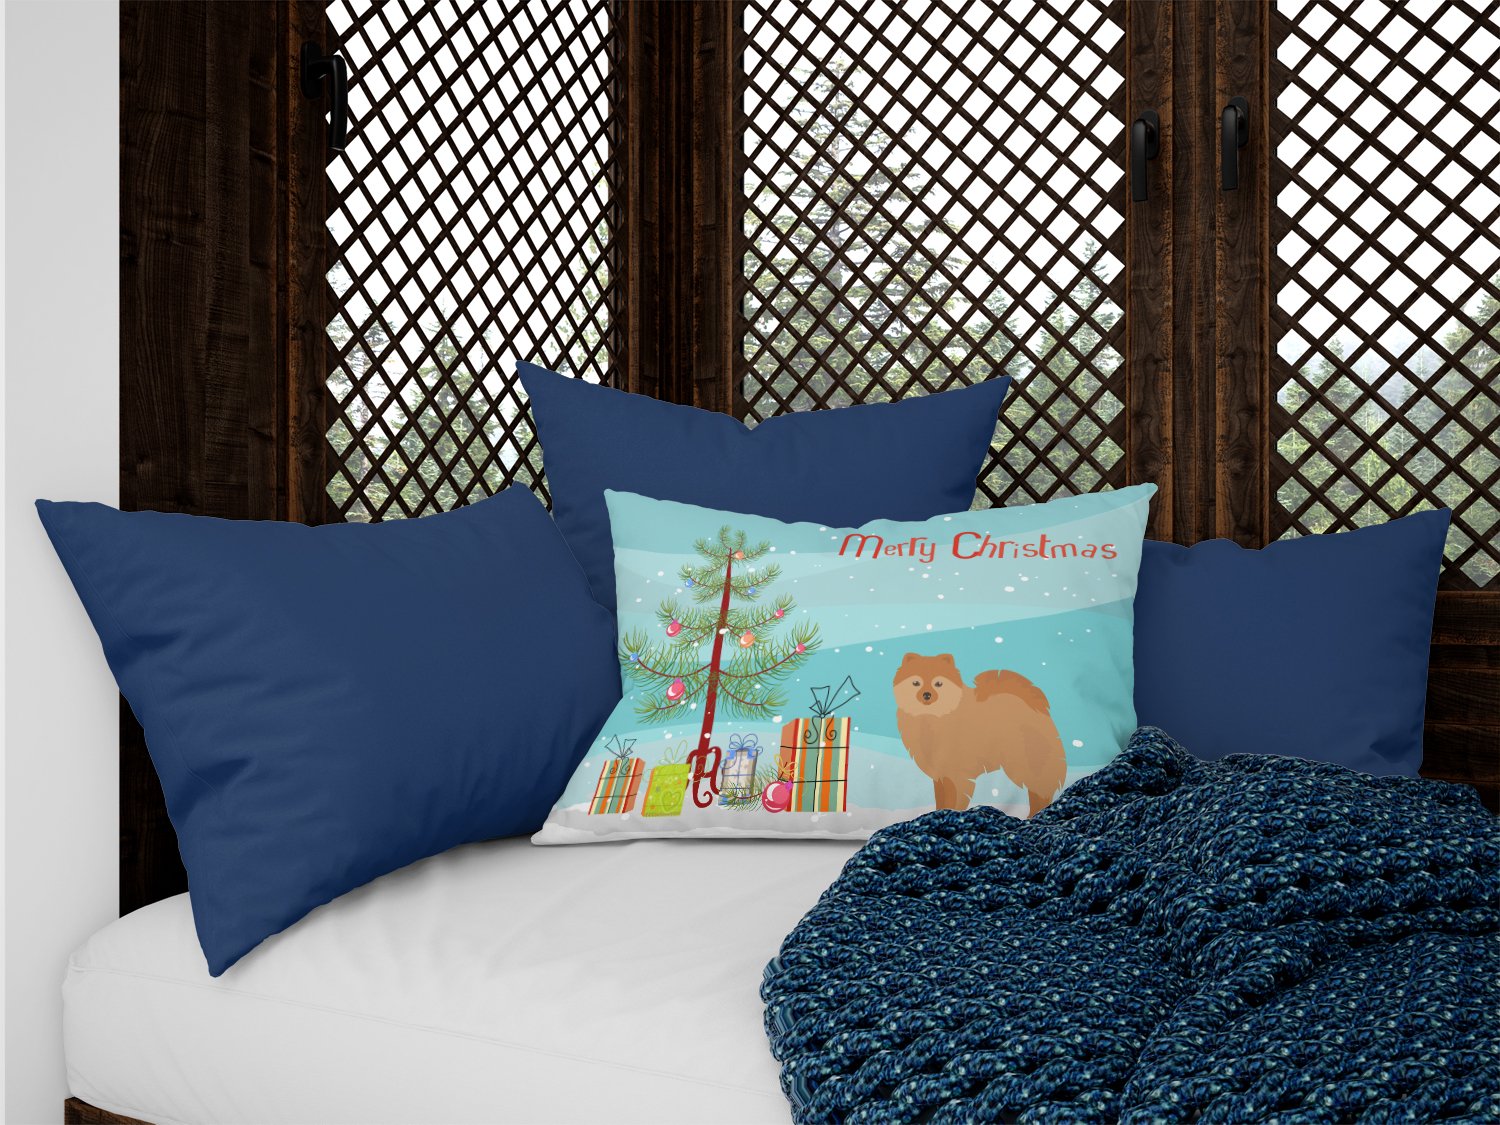 German Spitz Christmas Tree Canvas Fabric Decorative Pillow CK3456PW1216 by Caroline's Treasures